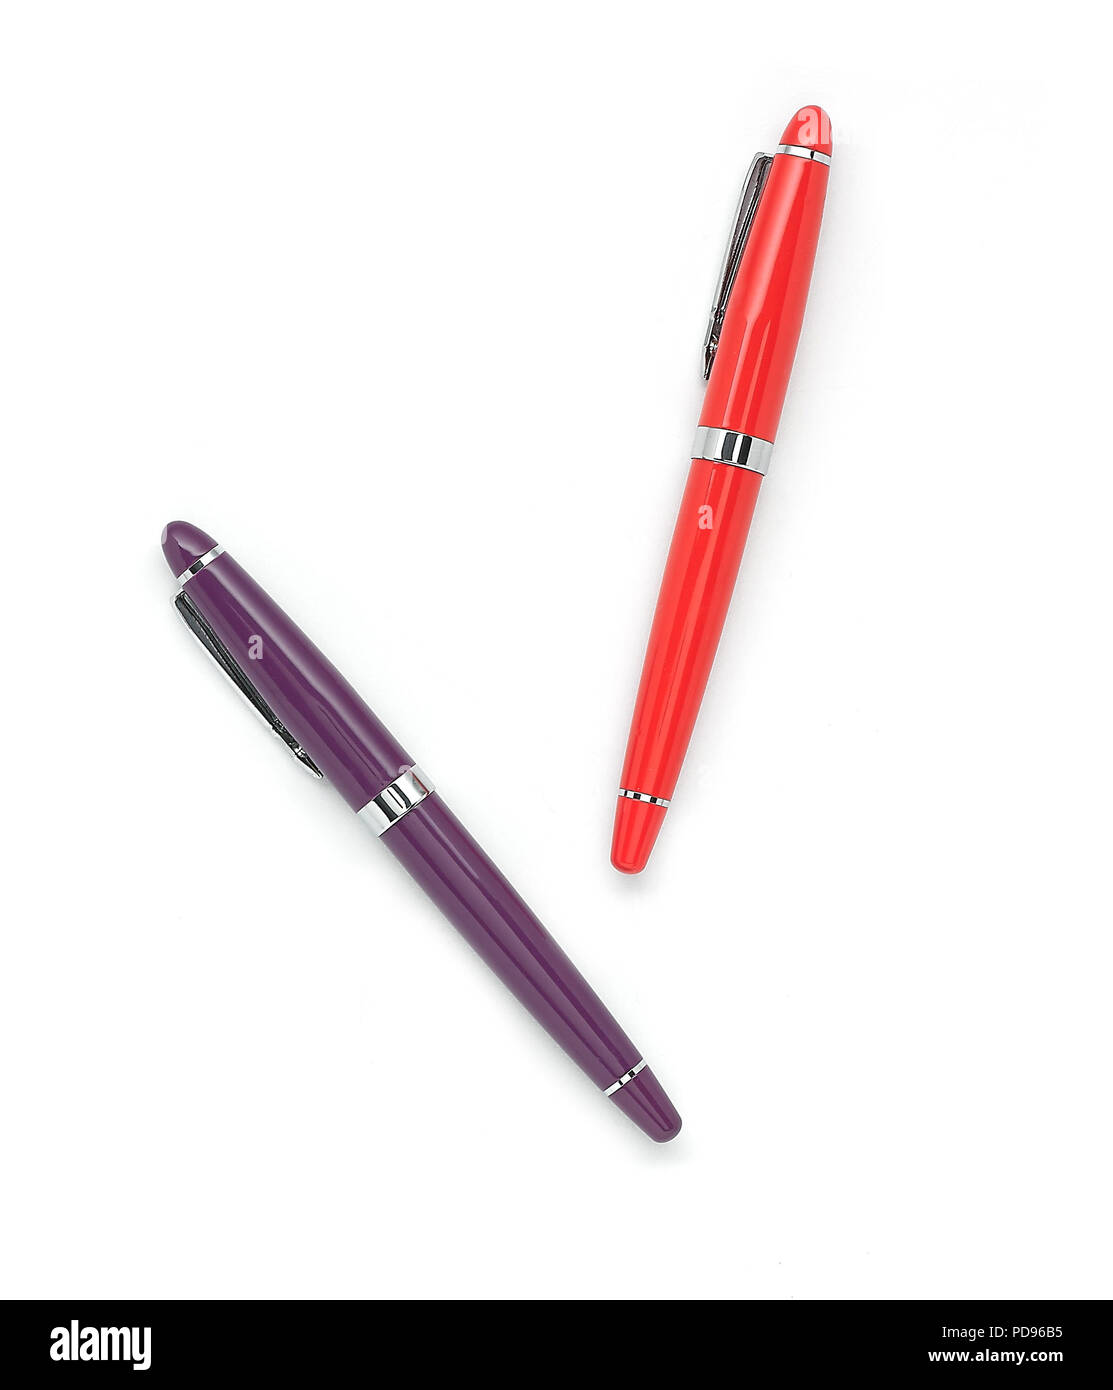 Orange and purple writing pens Stock Photo